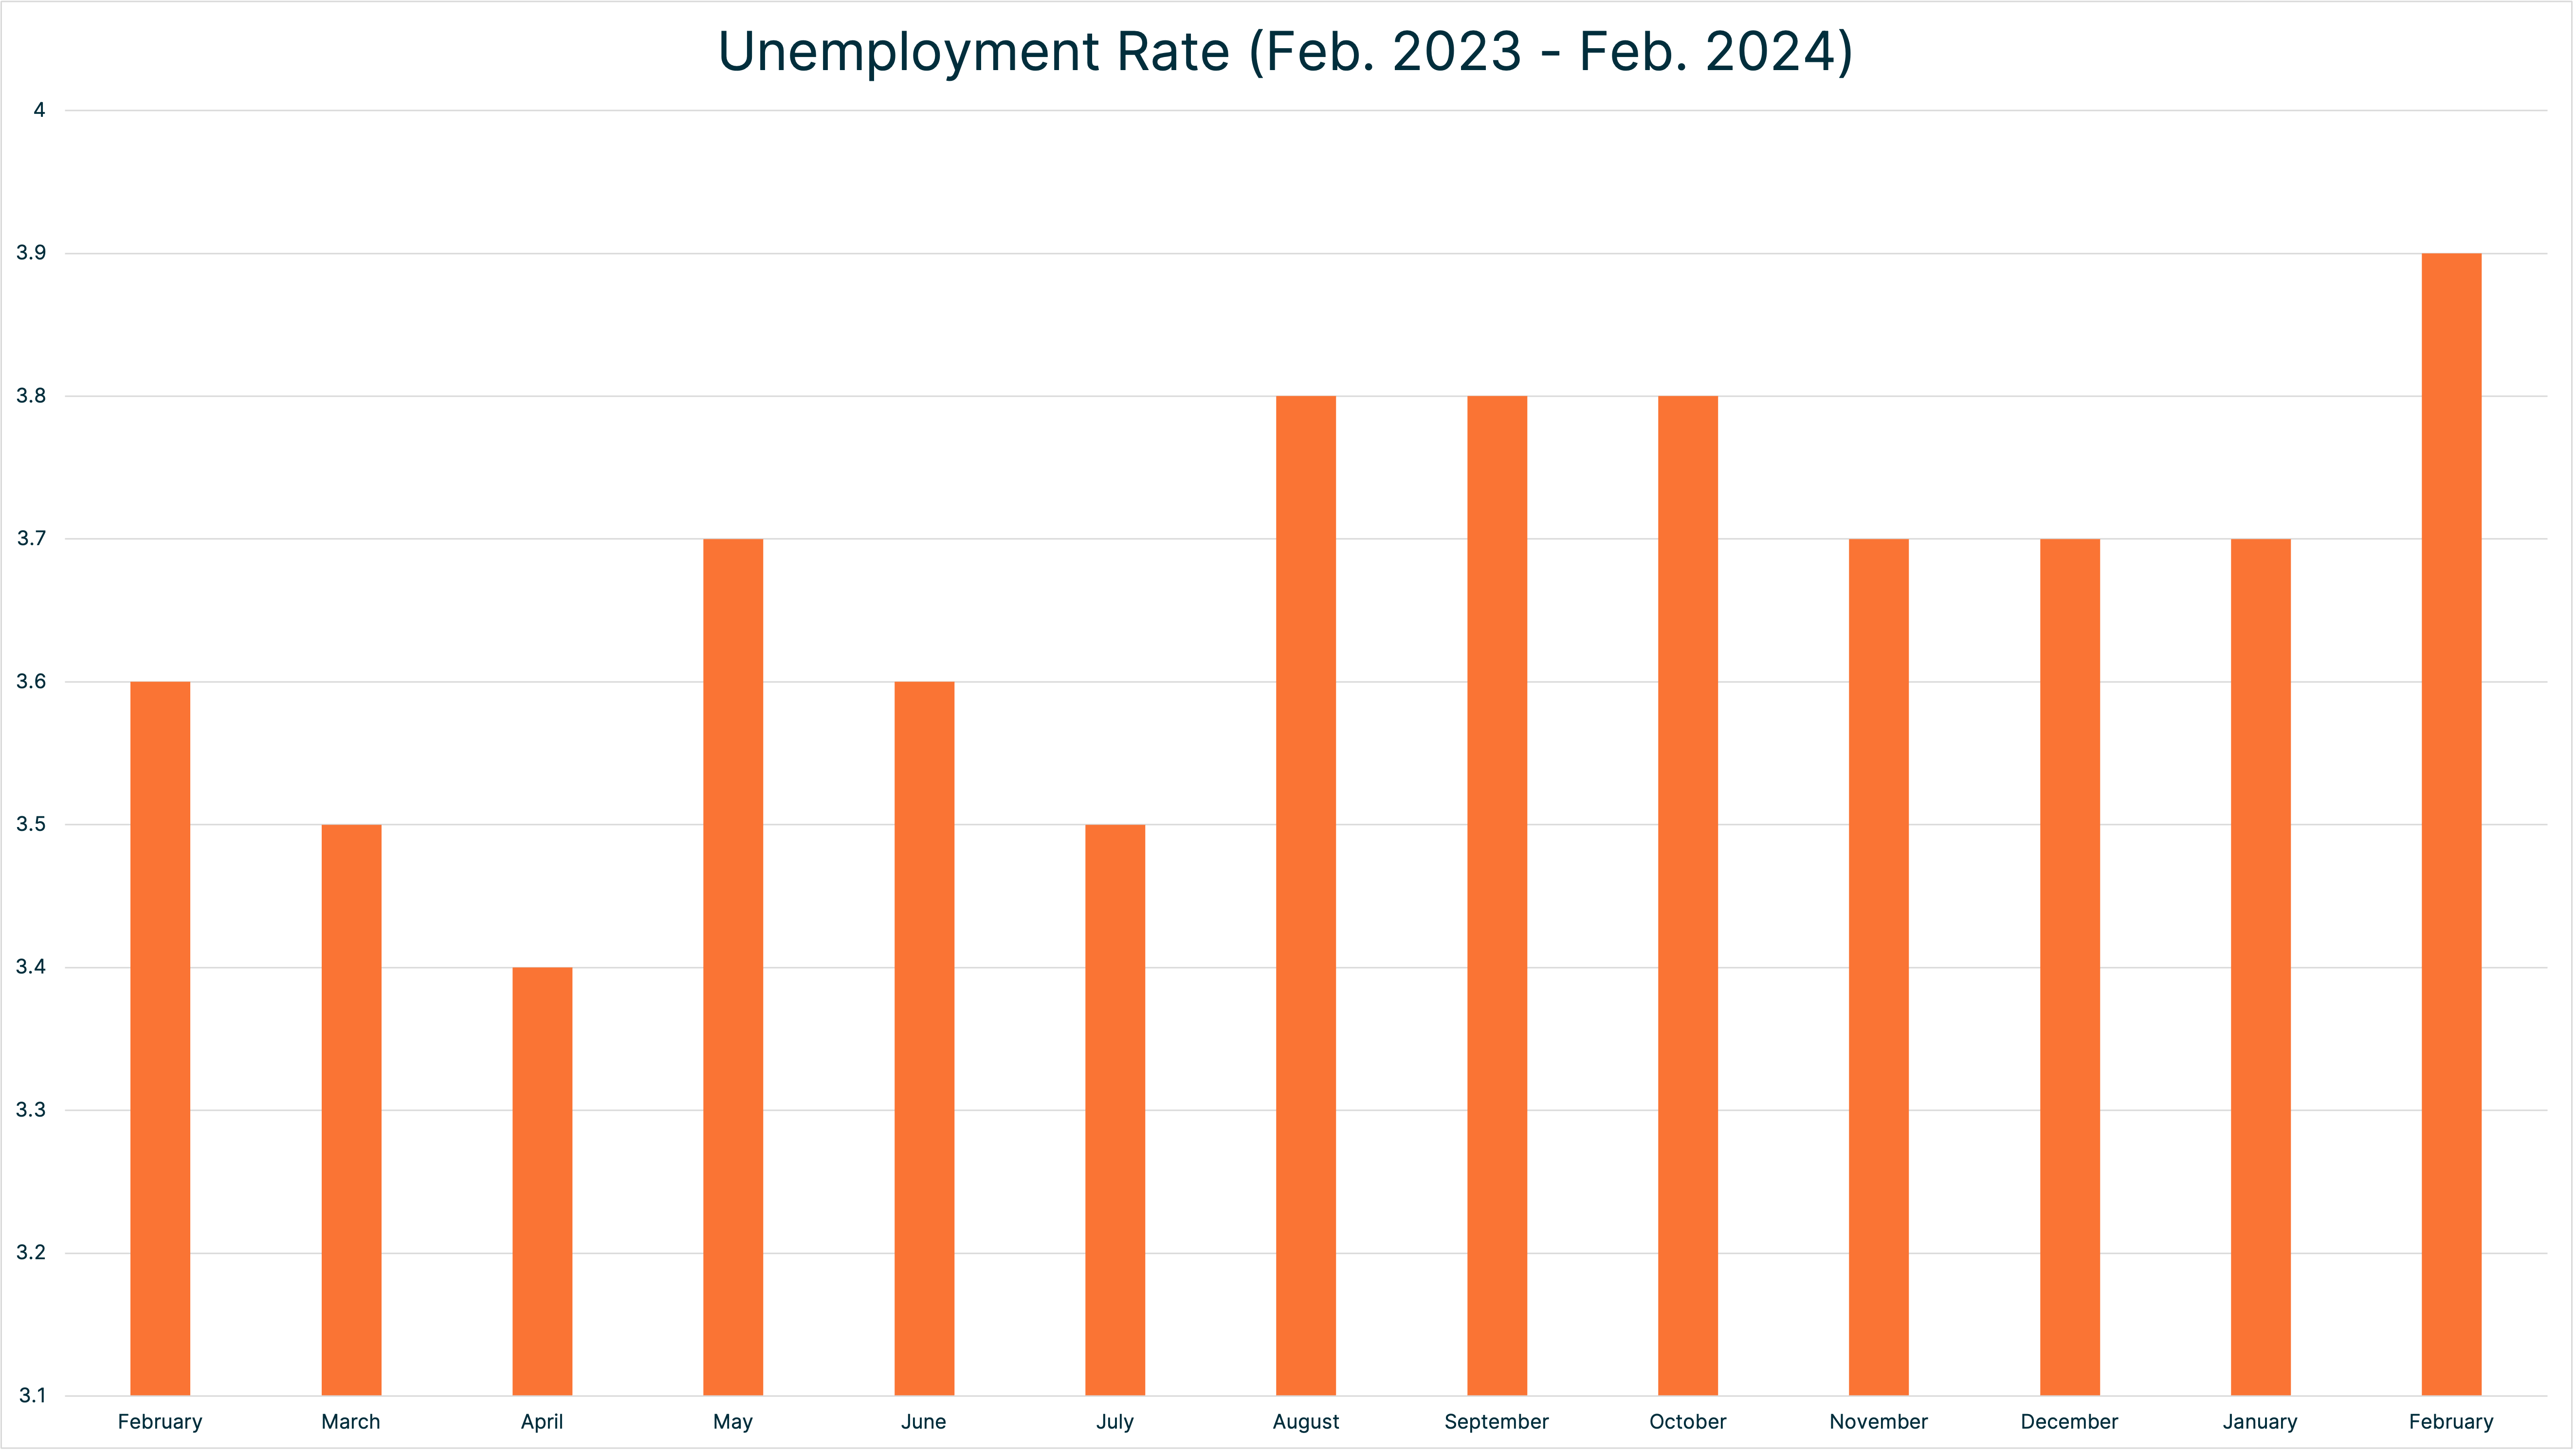 February BLS Jobs Report Unemployment GRpahs